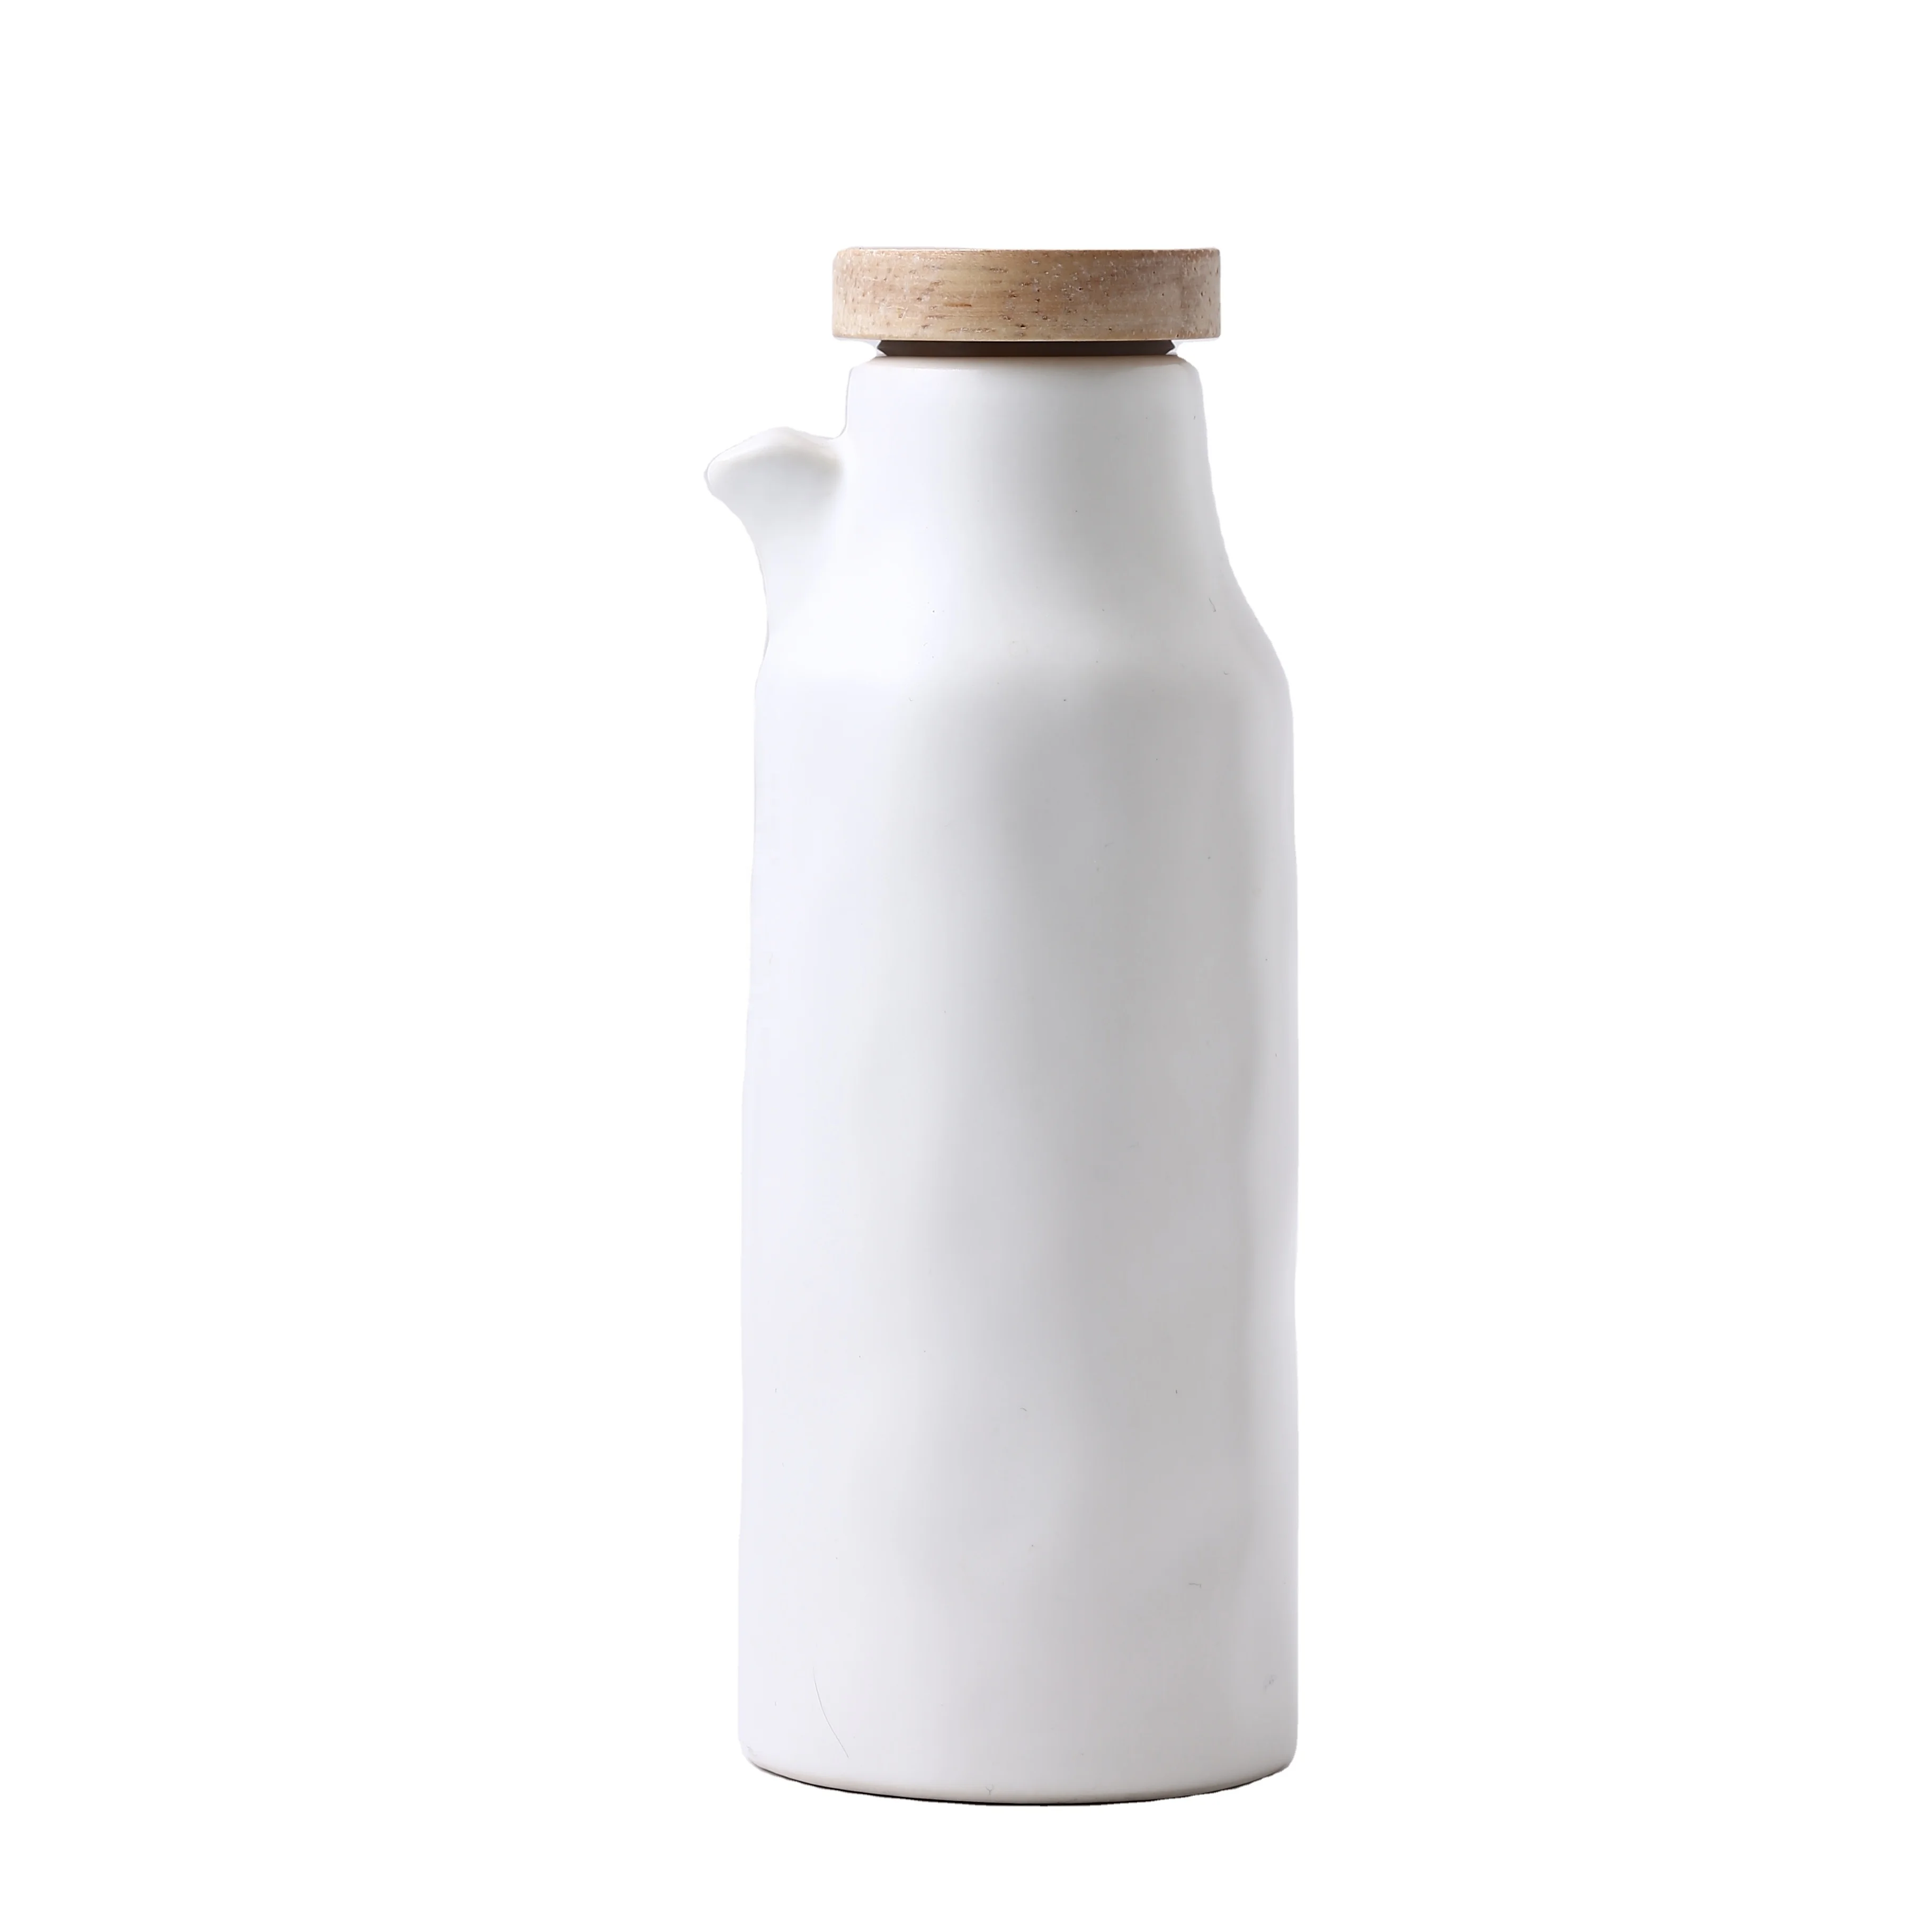 

Kitchen 400ml ware white glaze cooking ceramic vinegar olive oil bottle dispenser with wooden cork, White / black